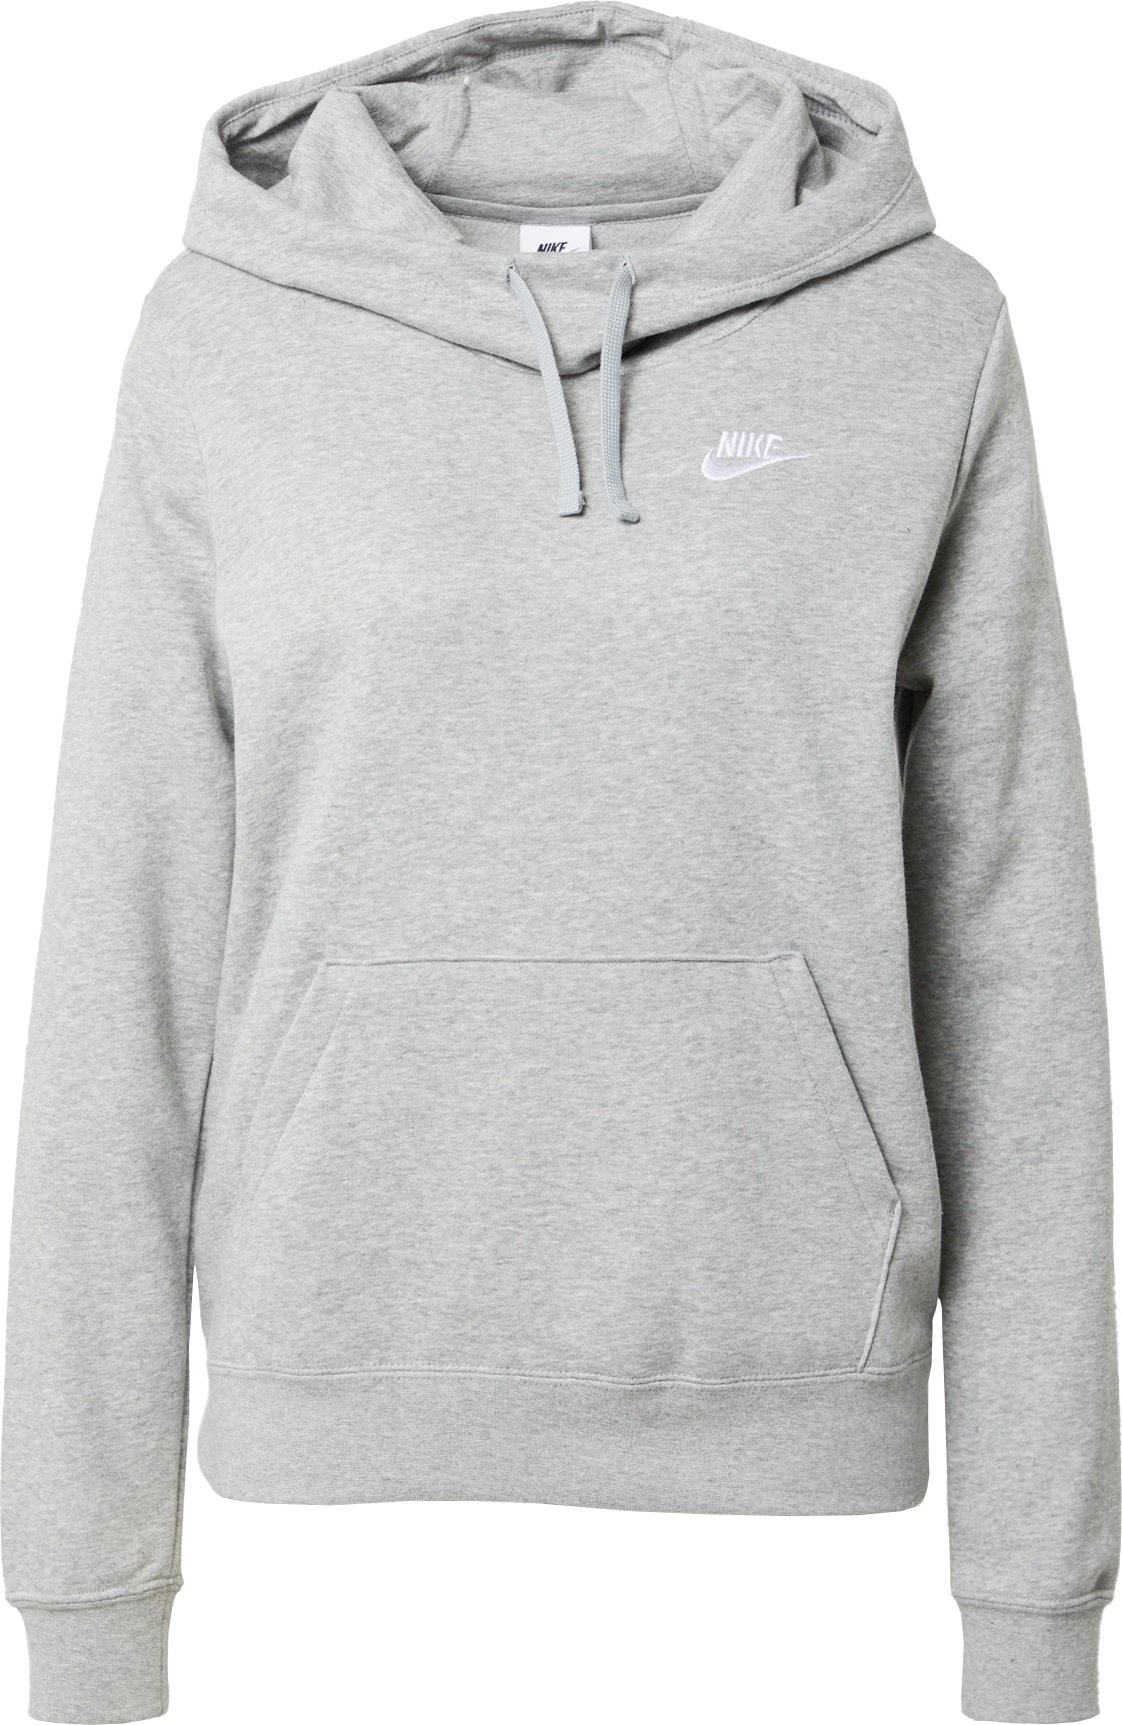 Nike Sportswear Mikina šedý melír / bílá